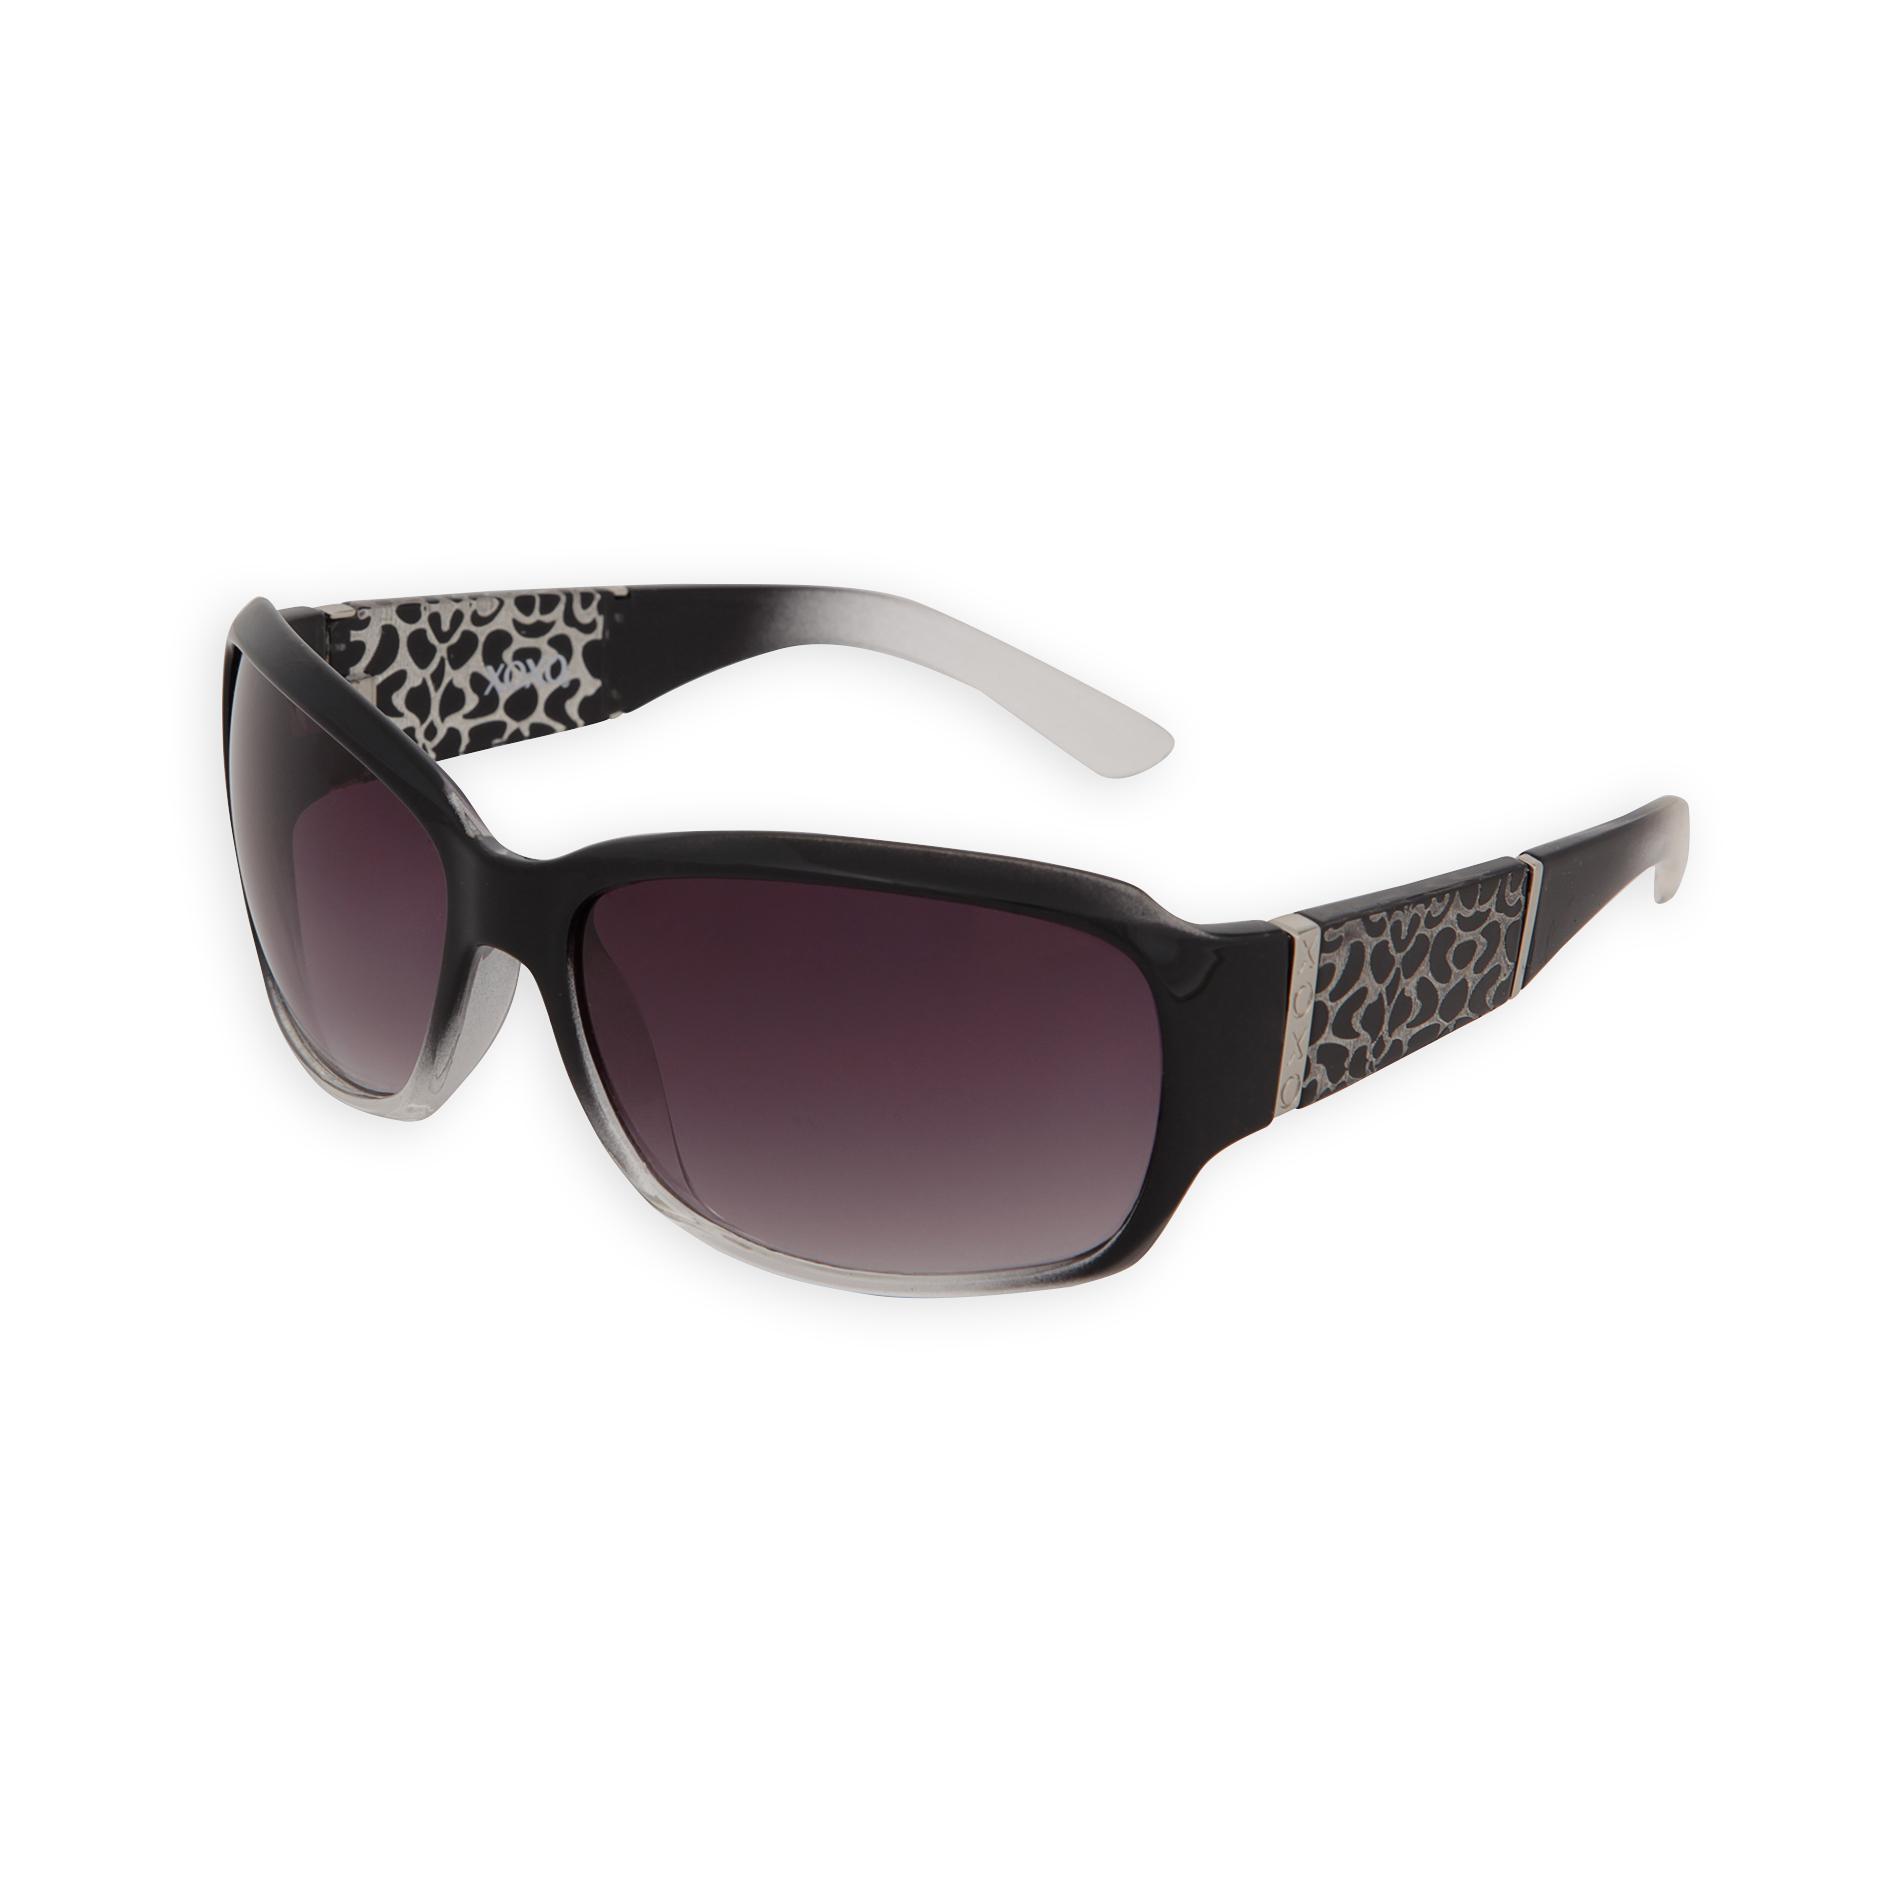 XOXO Women's Oversized Sunglasses - Leopard Print